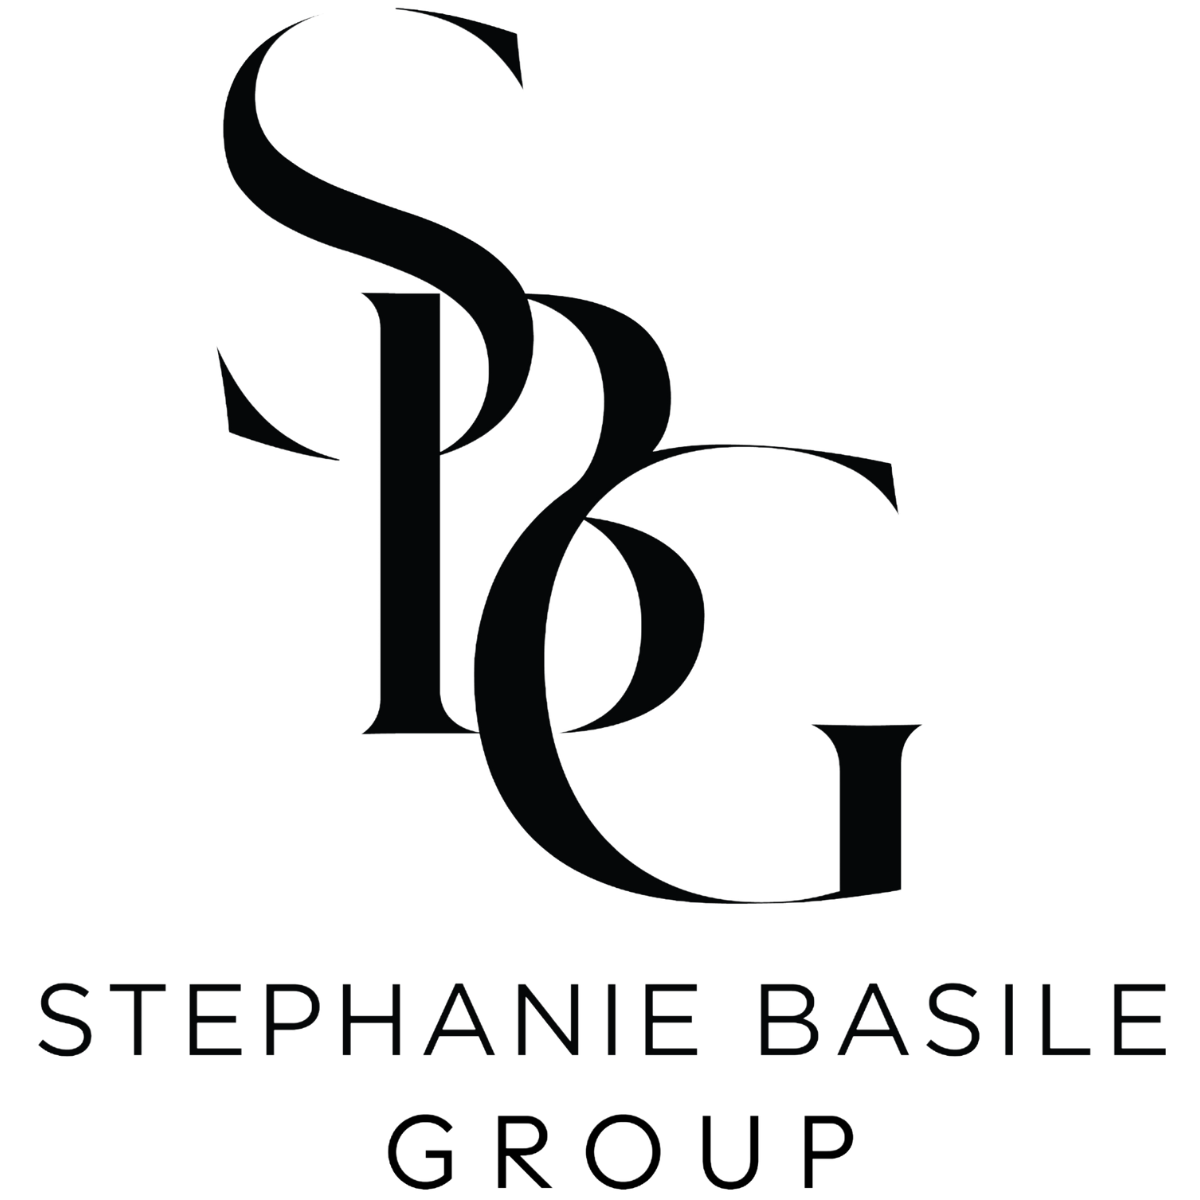 The logo of Stephanie Basil